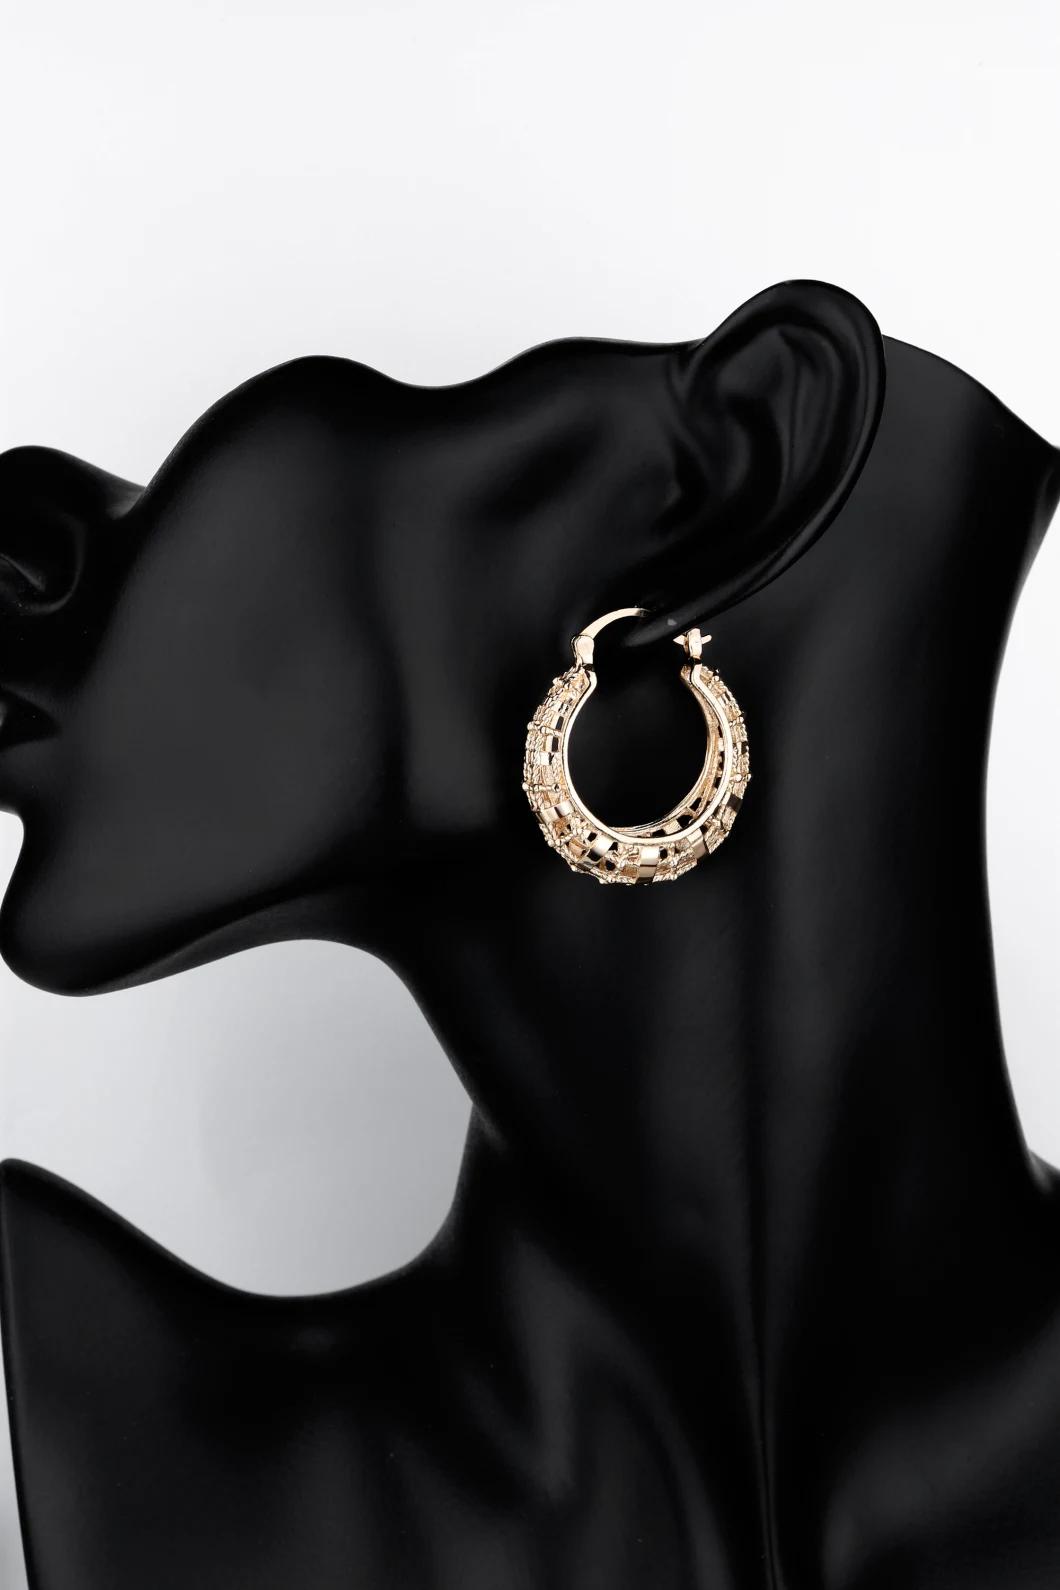 Wholesale New Gold Design Fashion Women Big Round Hoop Earring